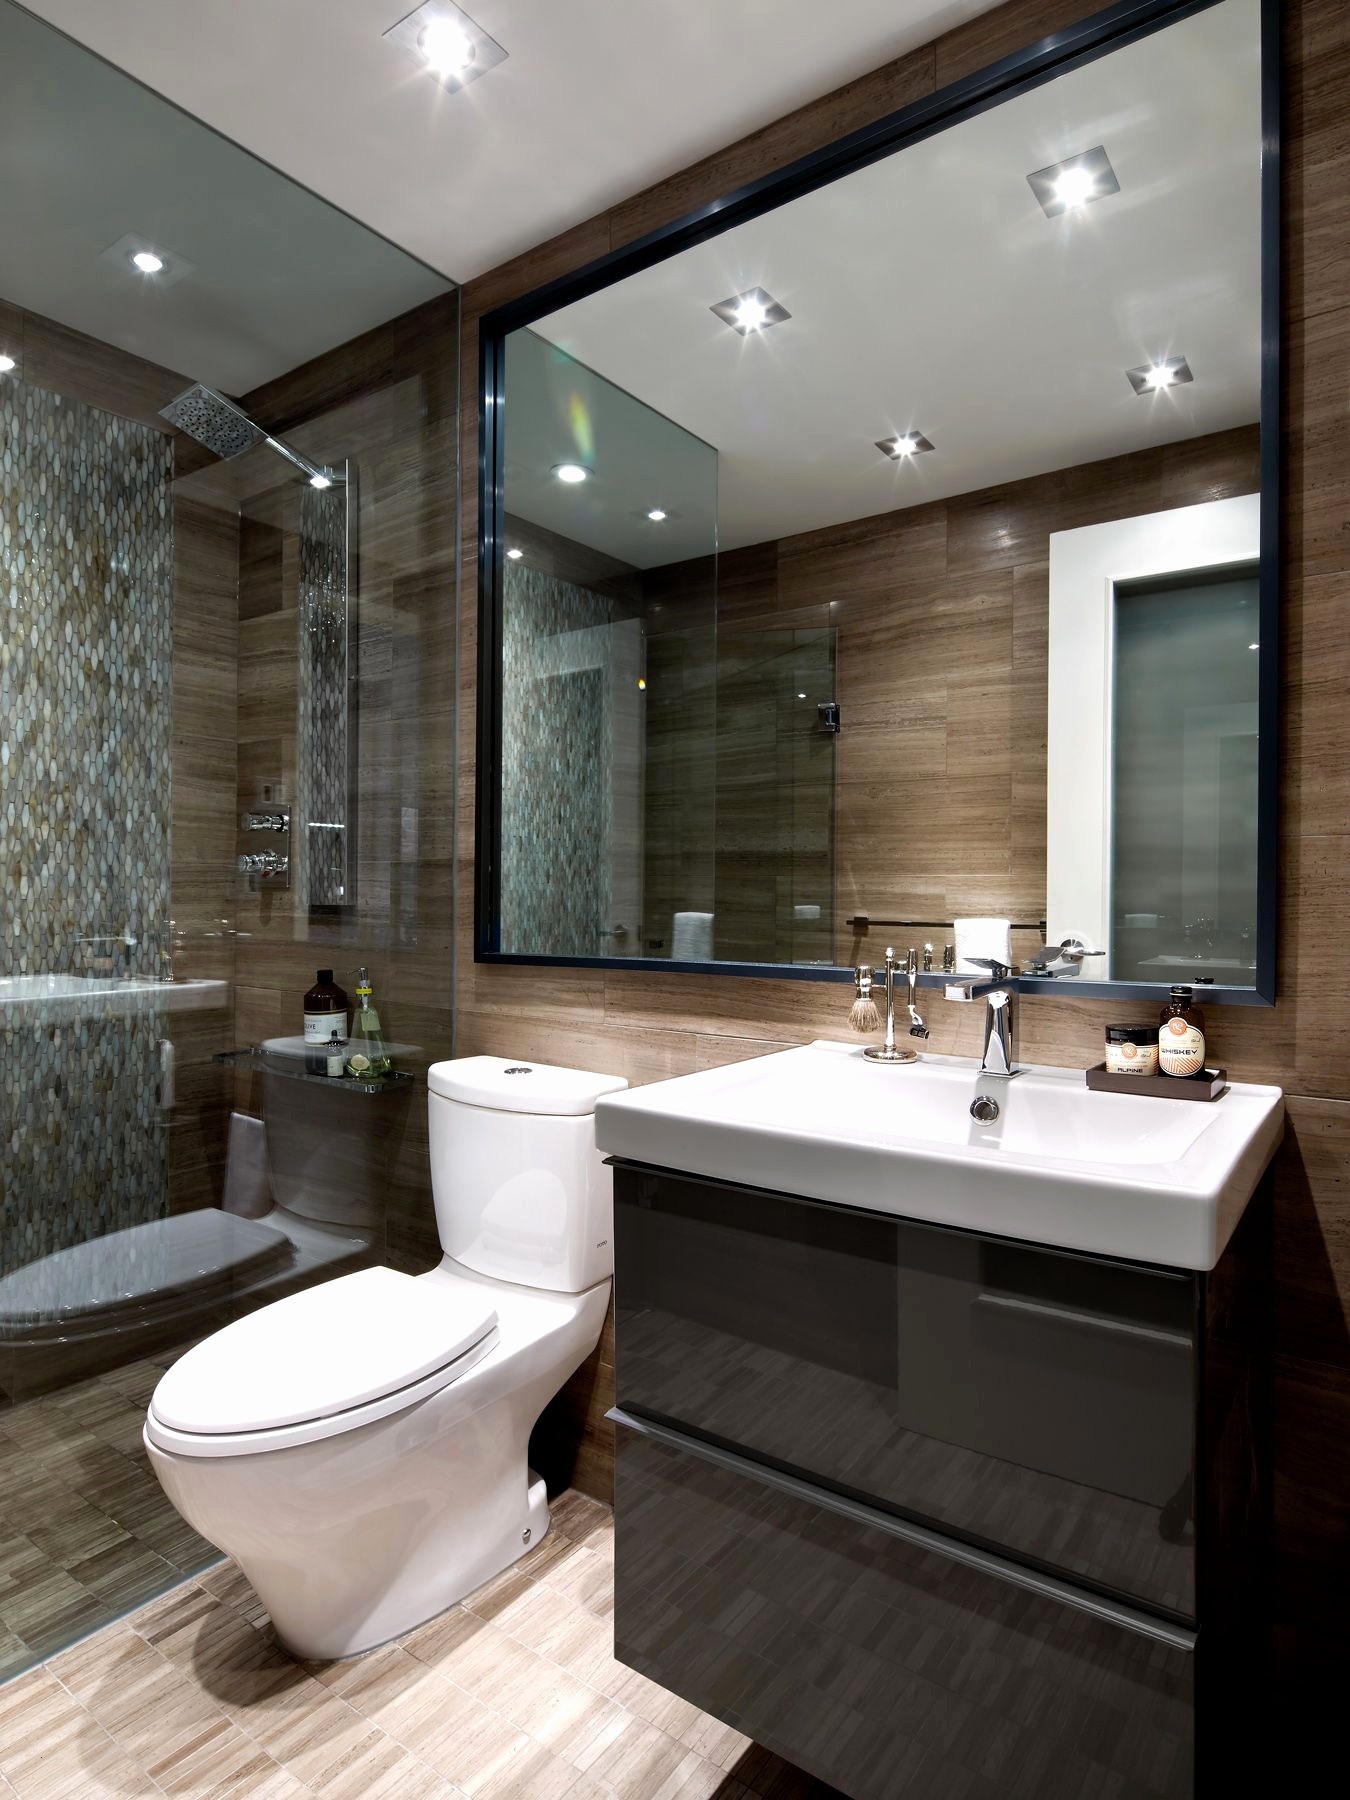 Modern Bathroom Vanity Lights Luxury Beautiful Bathroom Picture Ideas Lovely Tag toilet Ideas 0d Best